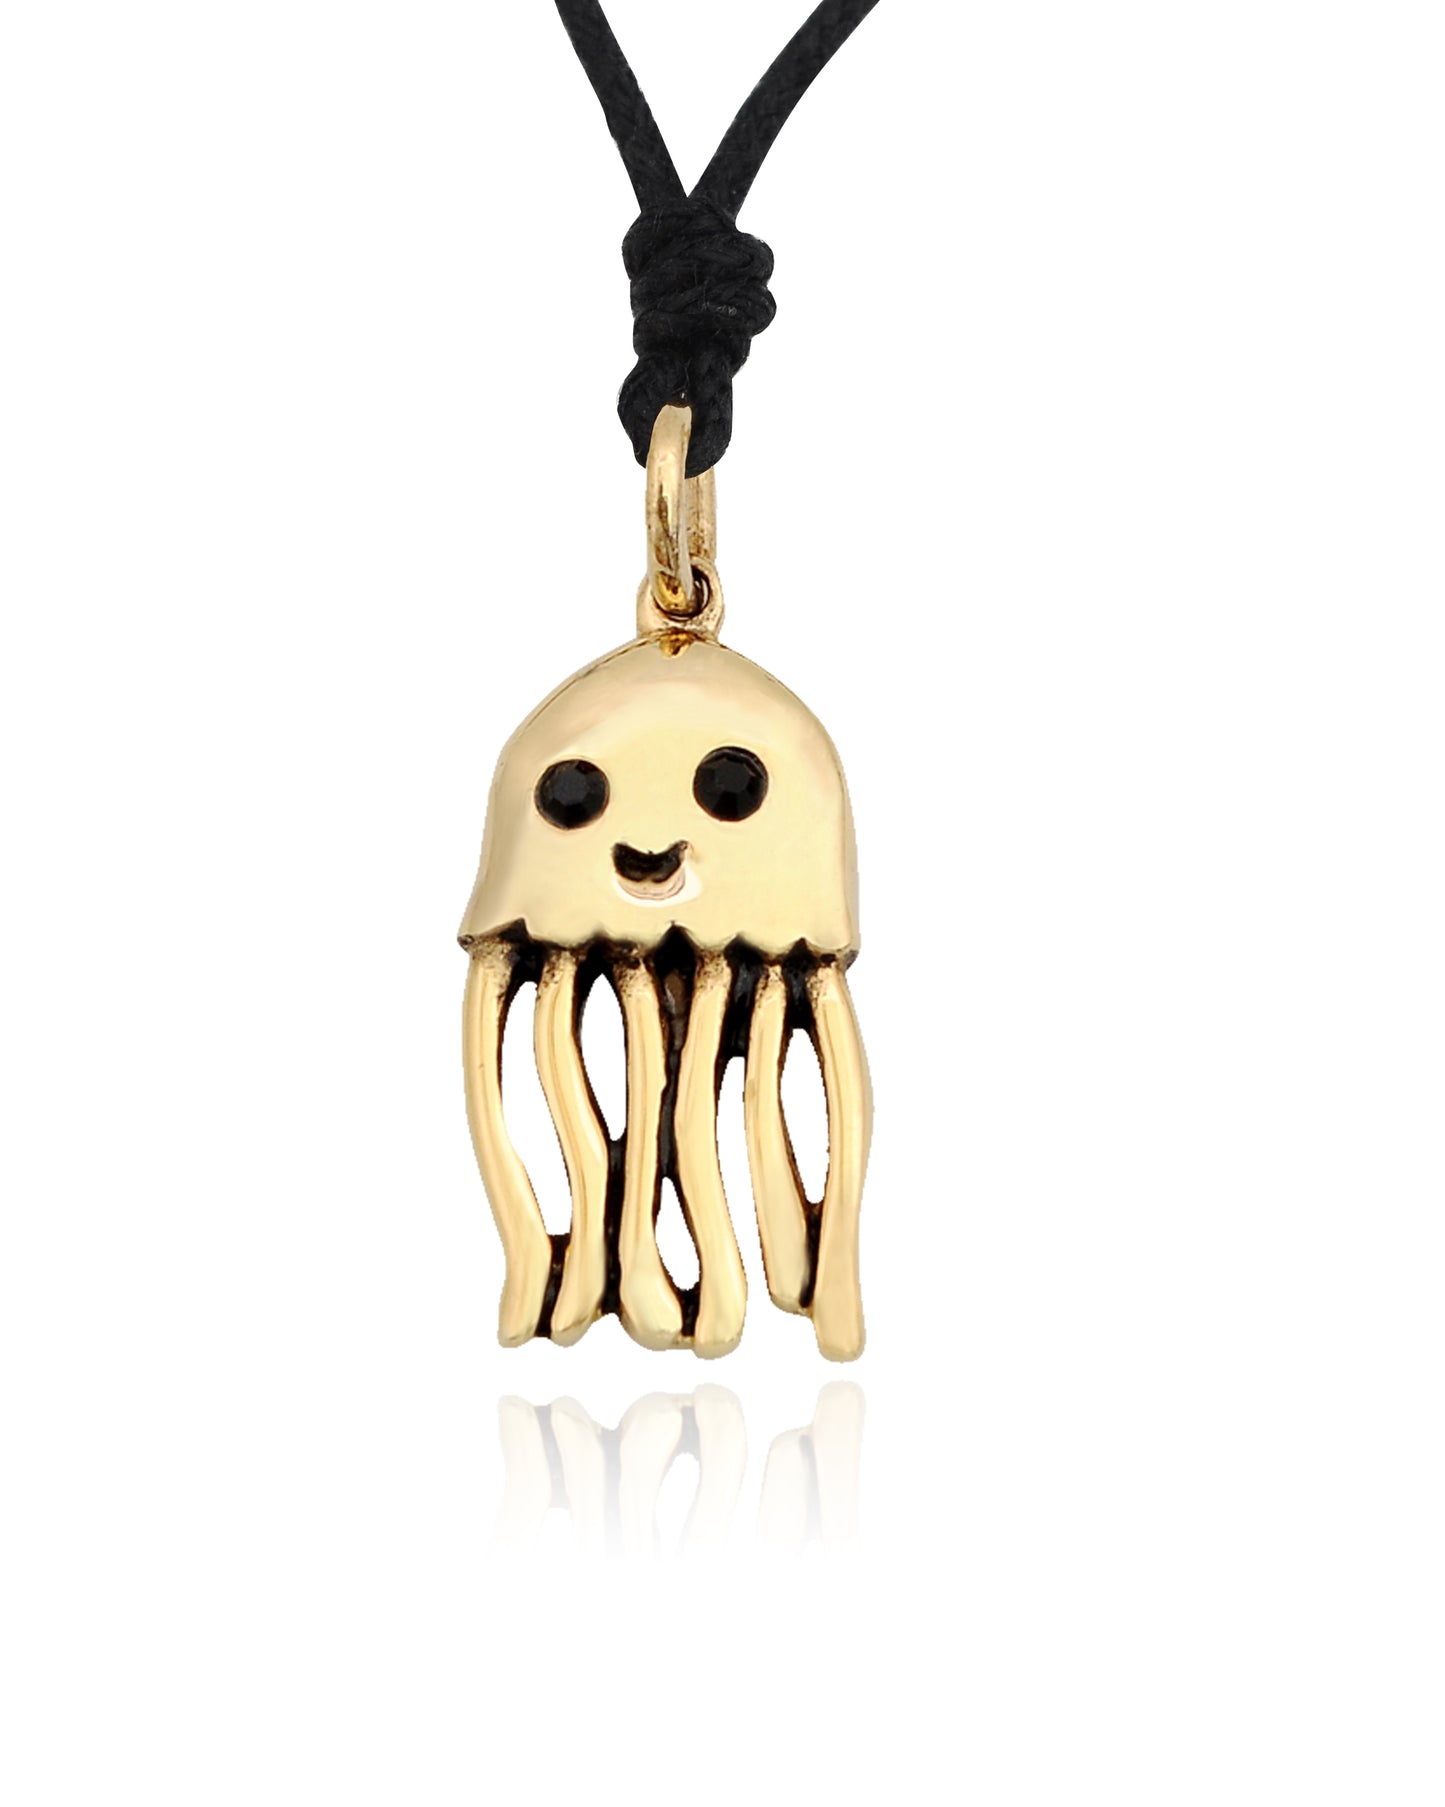 Black Jelllyfish Handmade Brass Necklace Pendant Jewelry With Cotton Cord